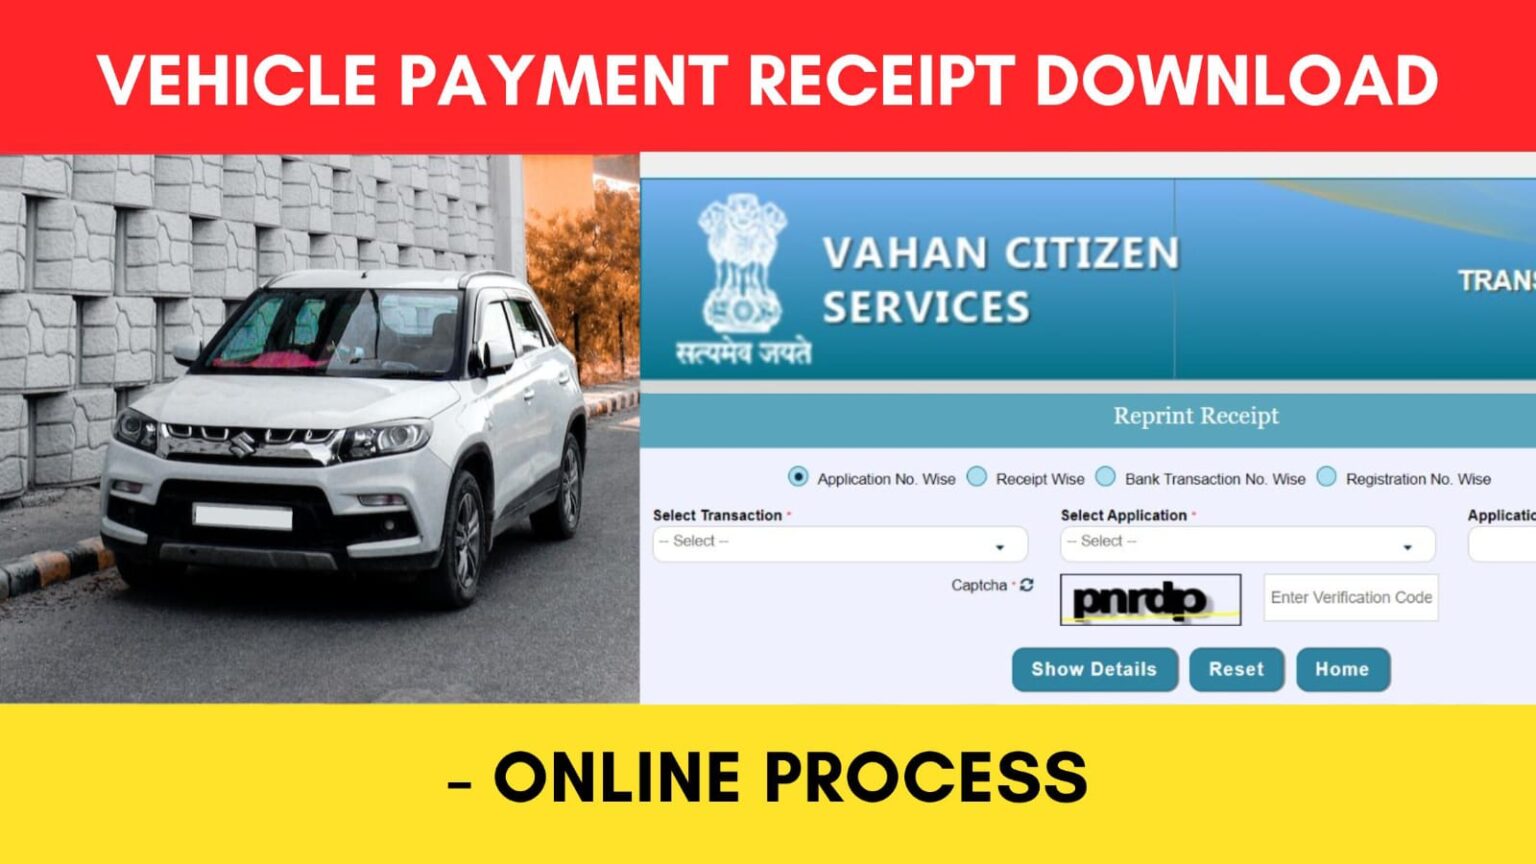 Vehicle Payment Receipt Download Process 1536x864 